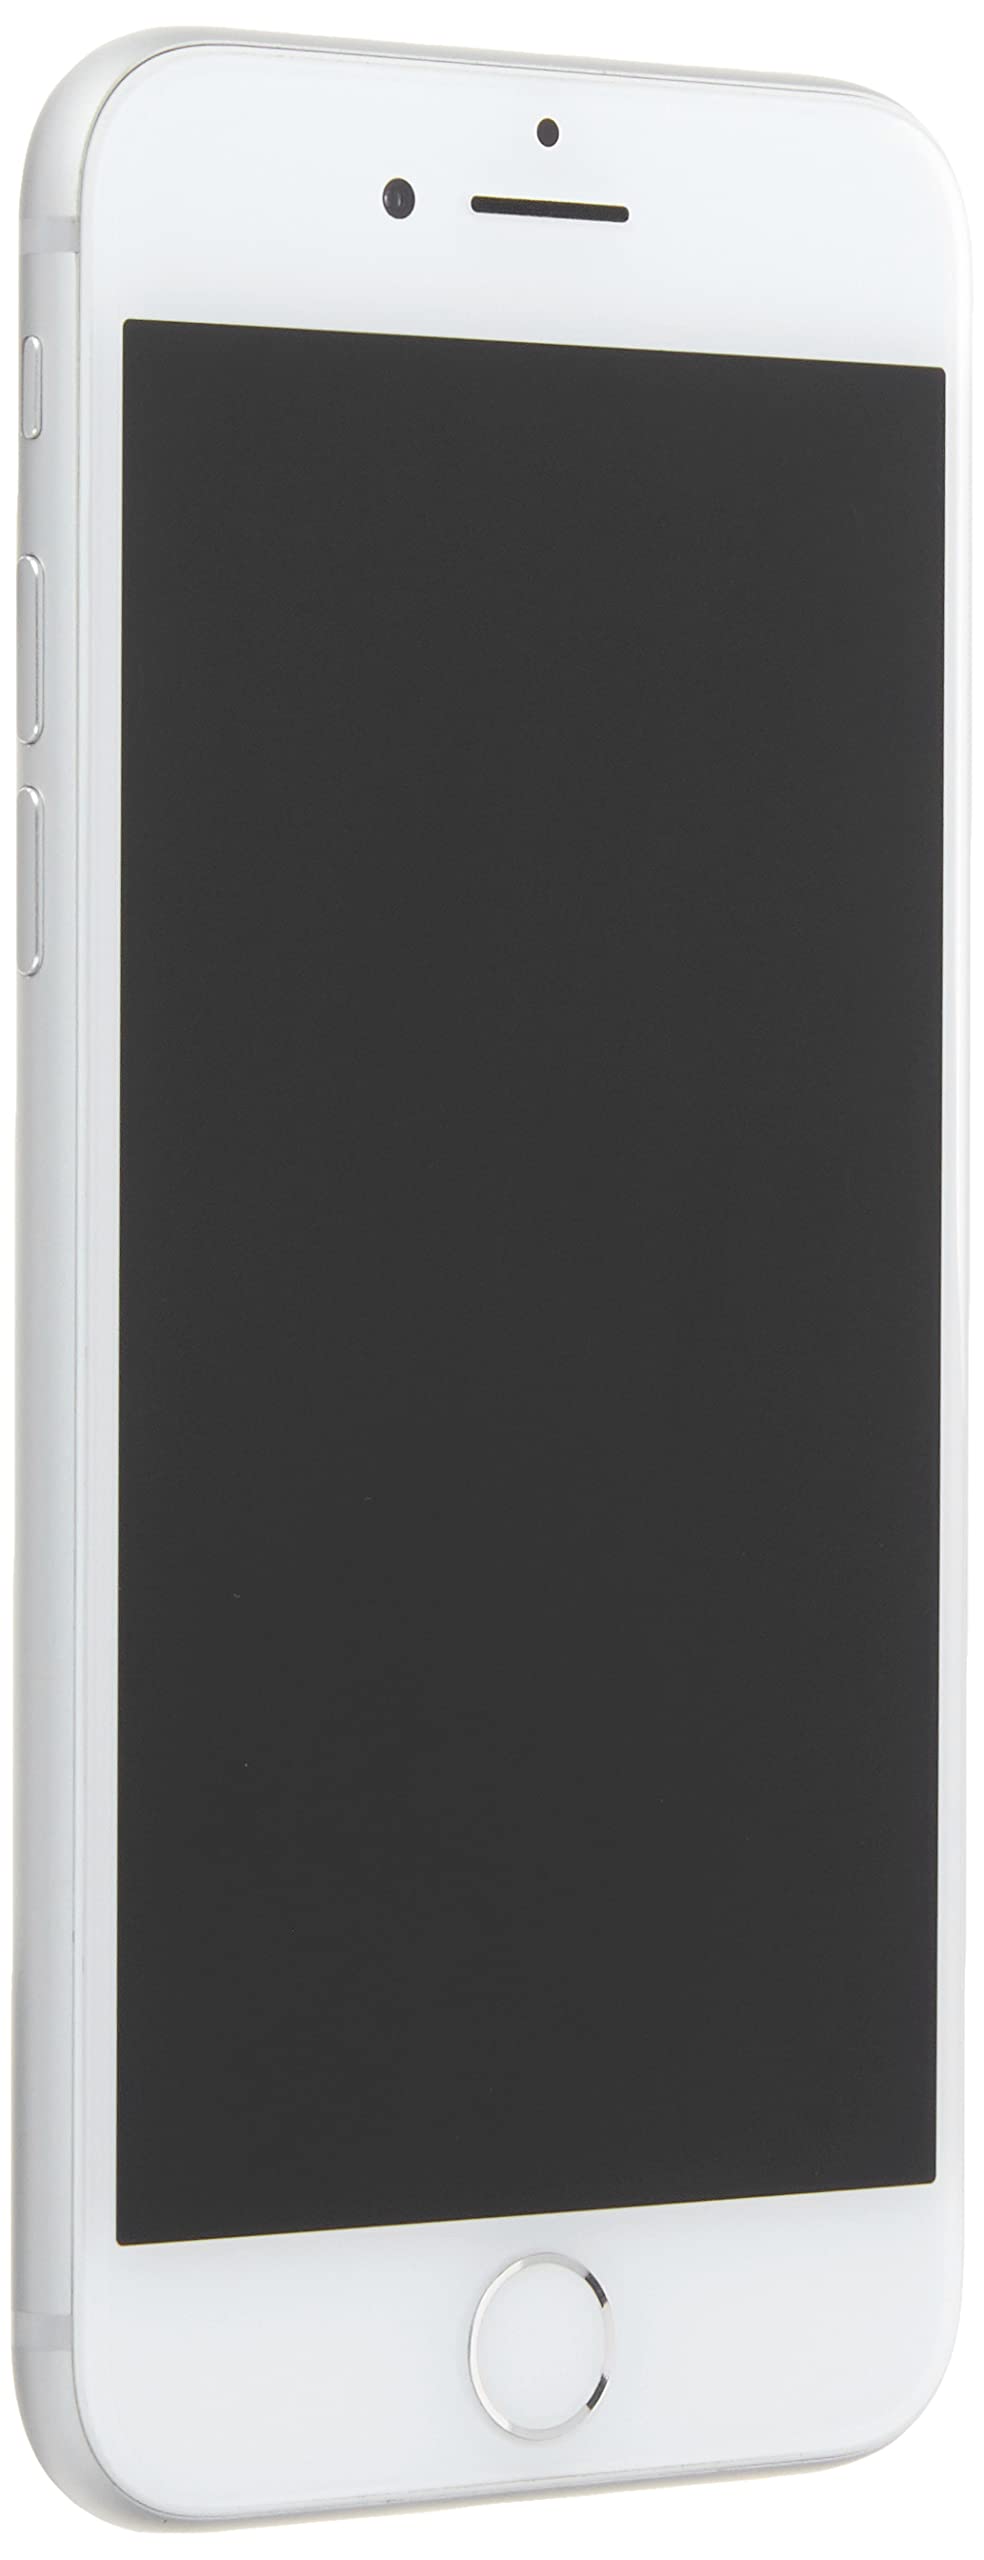 Apple iPhone 8, US Version, 64GB, Silver - Unlocked (Renewed)